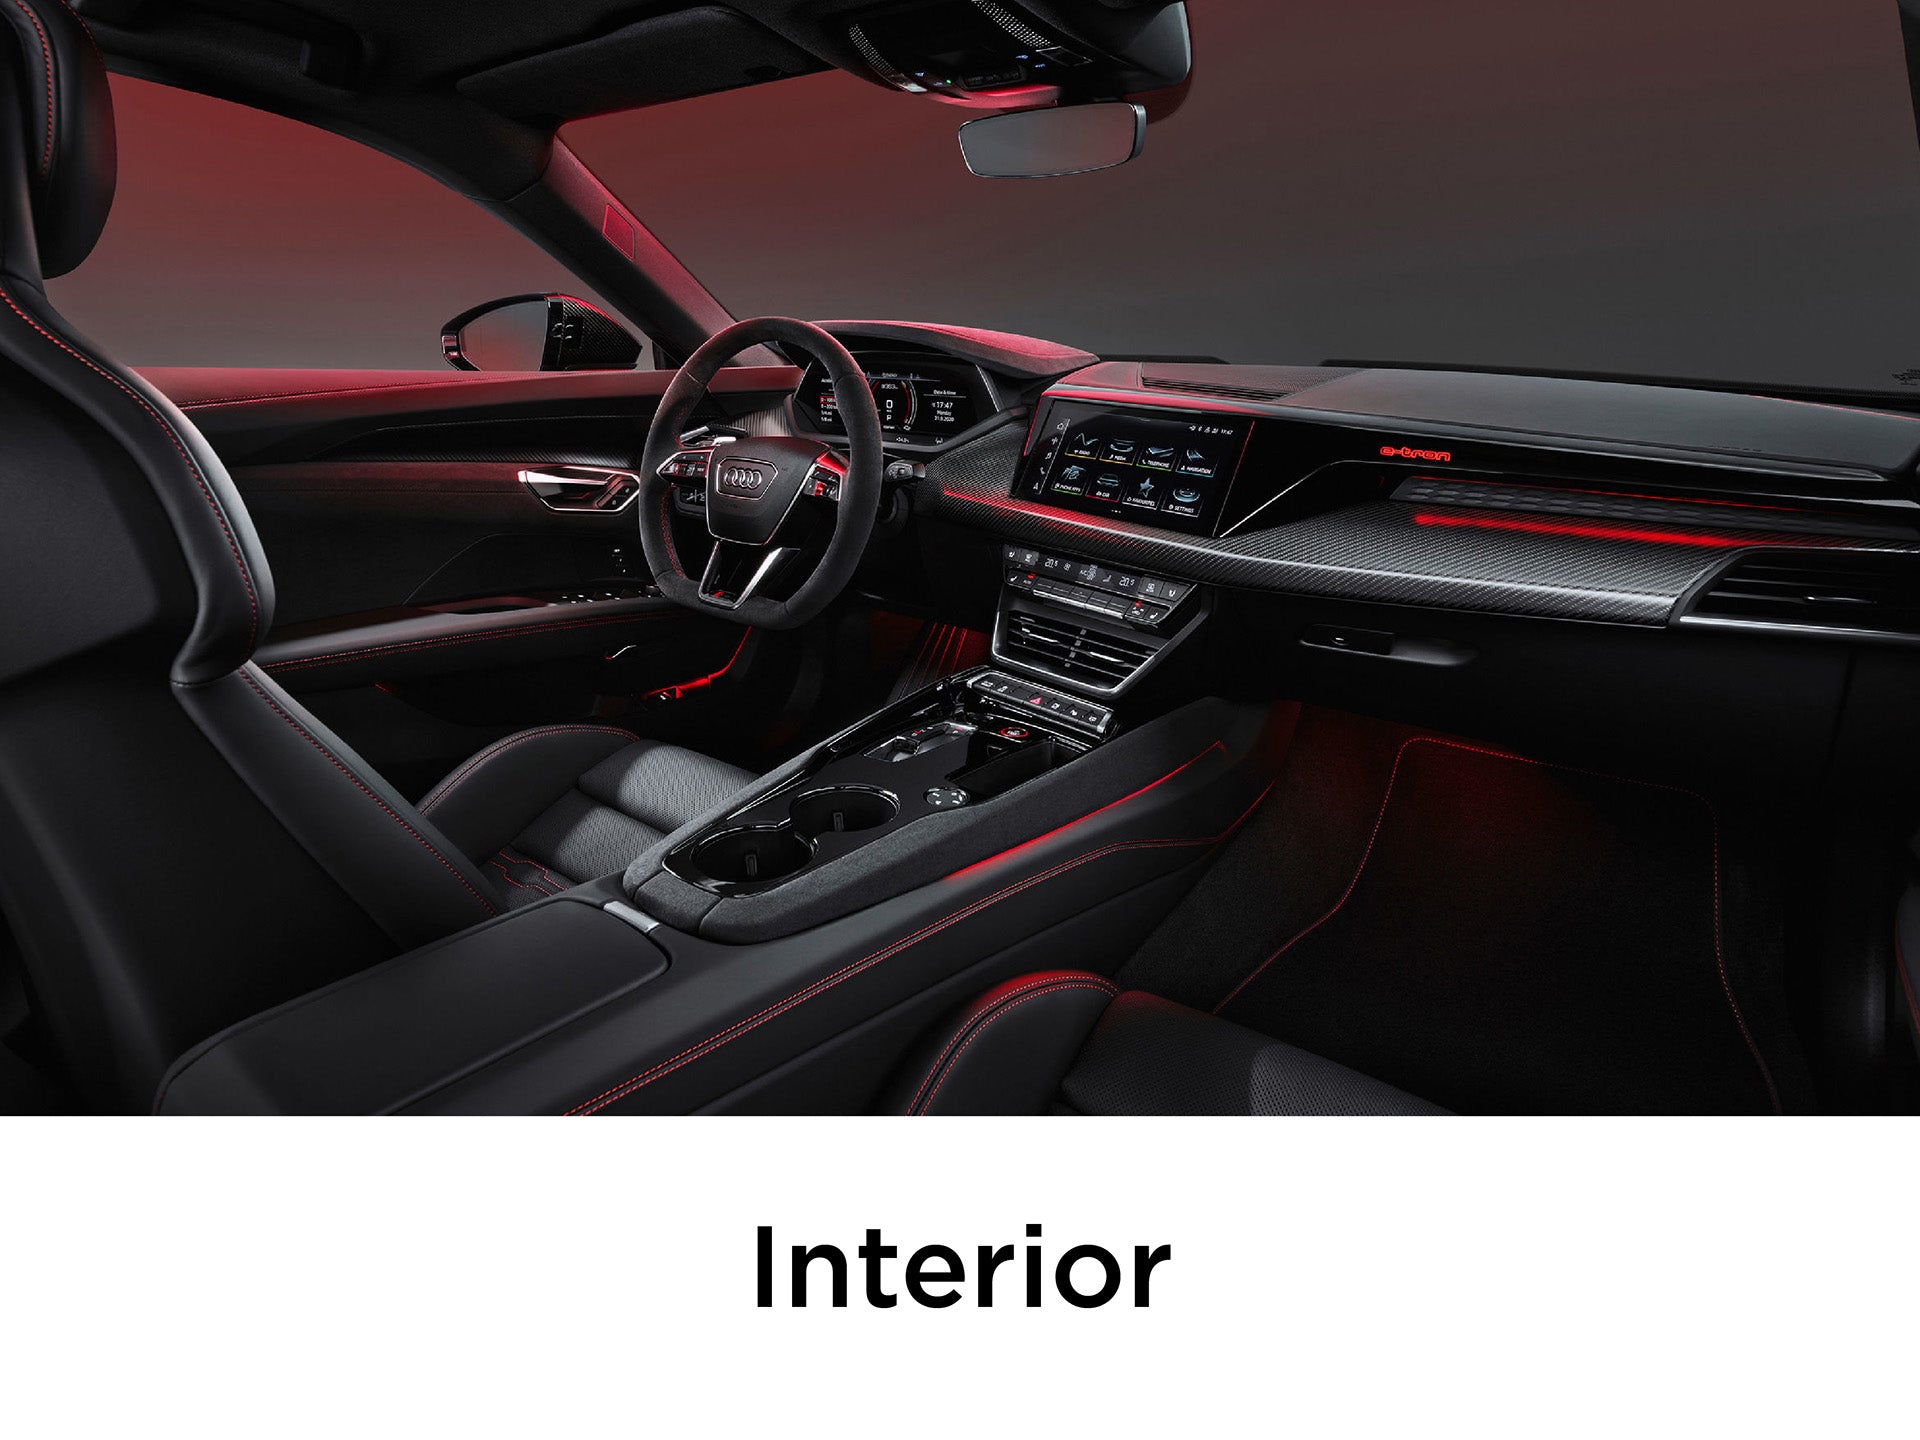 Audi E-Tron GT Accessories & Upgrades - EV Sportline - The Leader in  Electric Vehicle Accessories